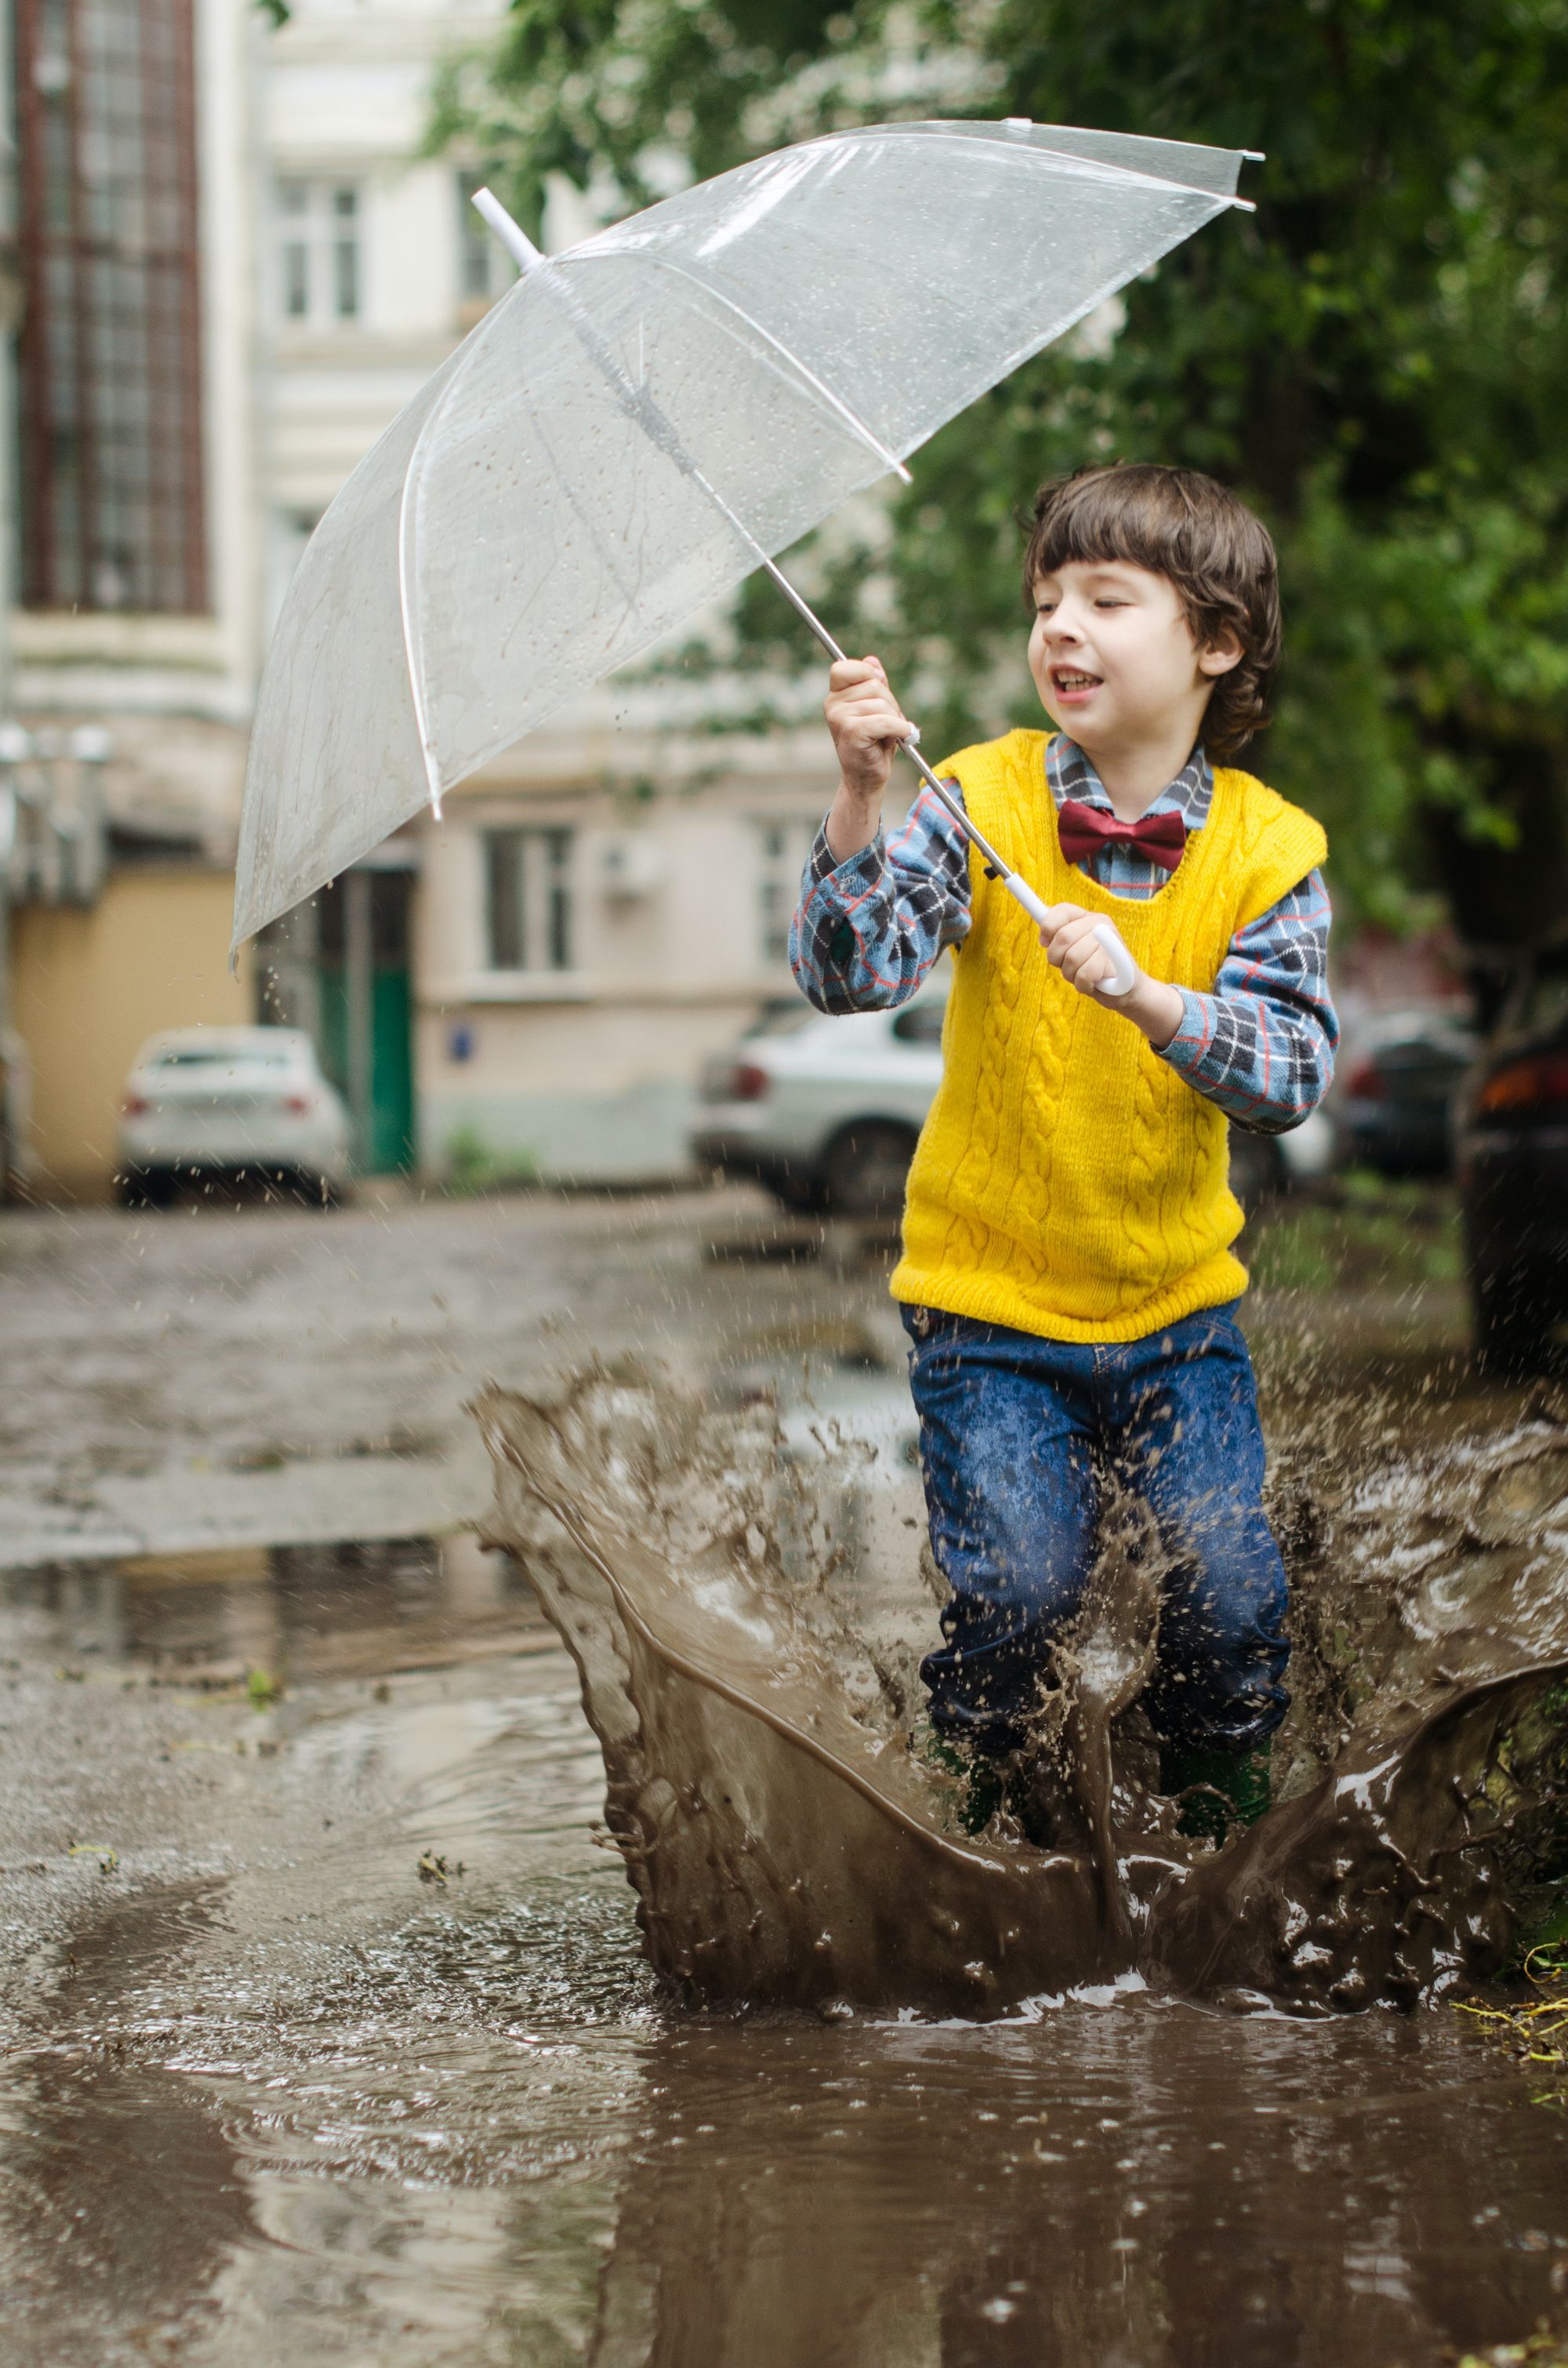 Best Kids Umbrellas: A Detailed Review